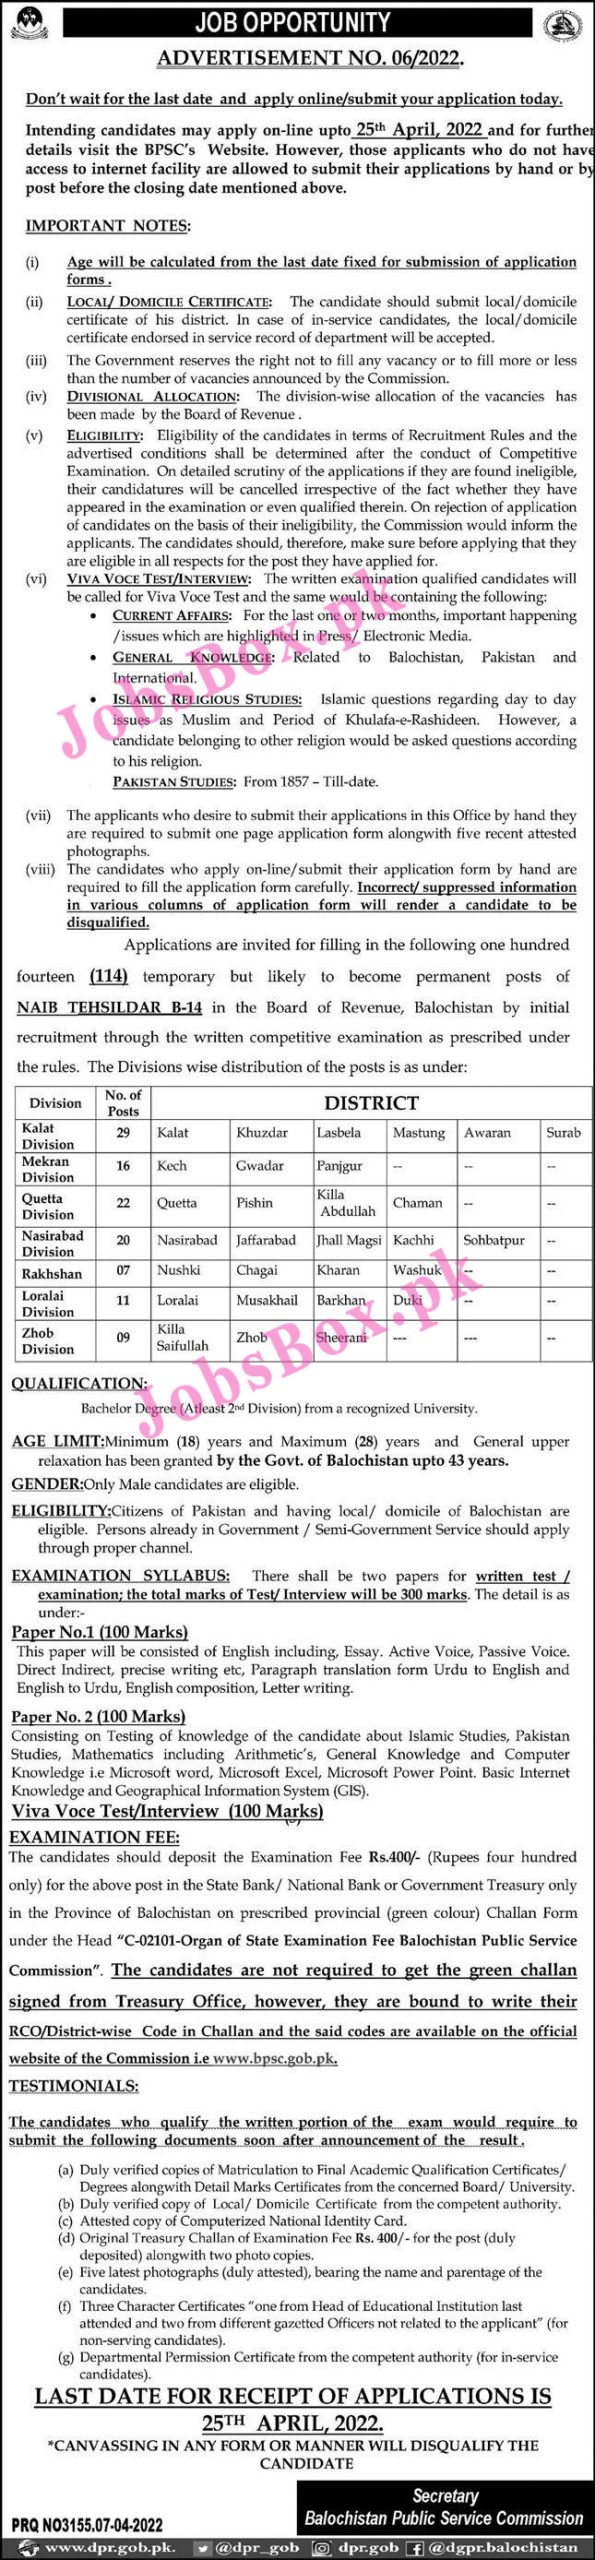 BPSC Jobs 2022 for Naib Tehsildar Advertisement No. 06/2022